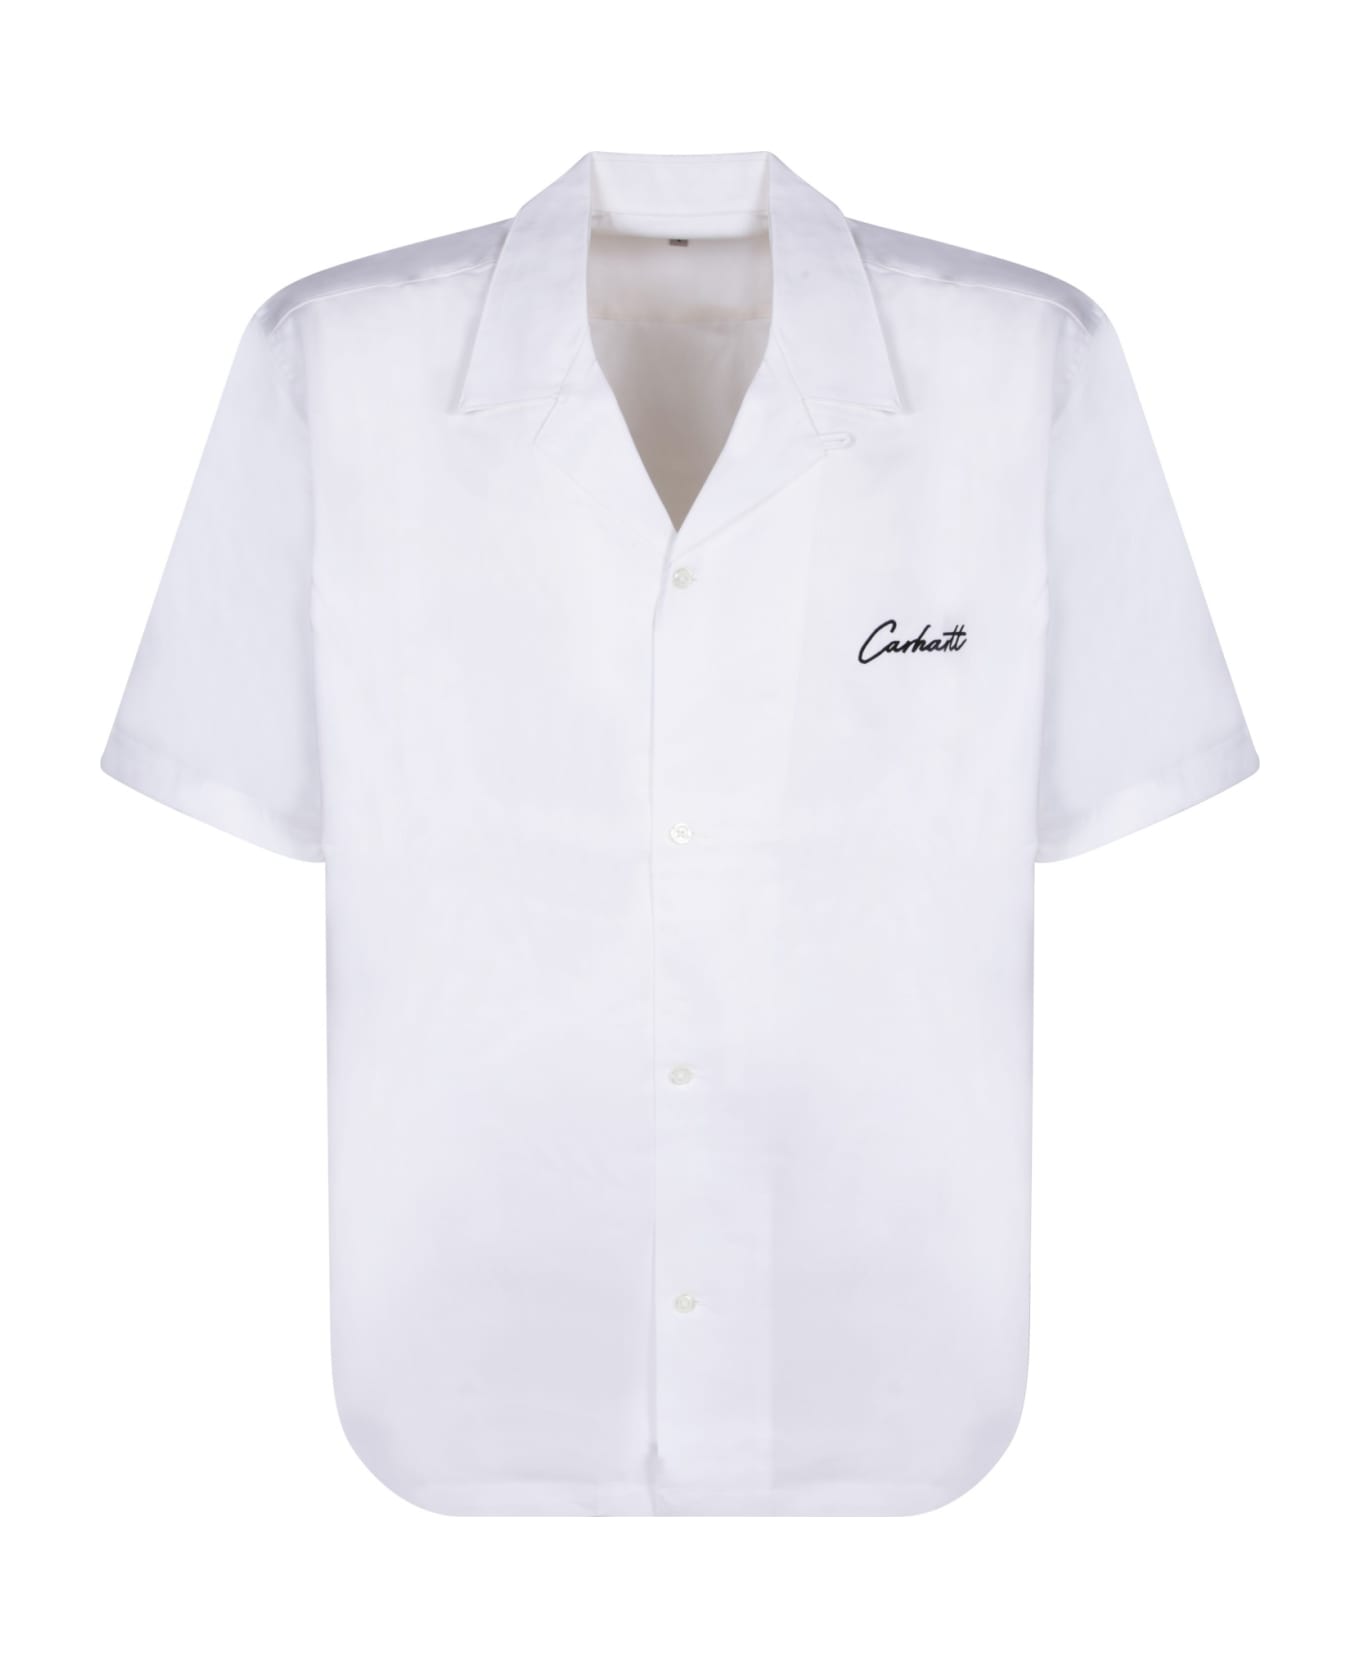 Carhartt Delray White Shirt - White